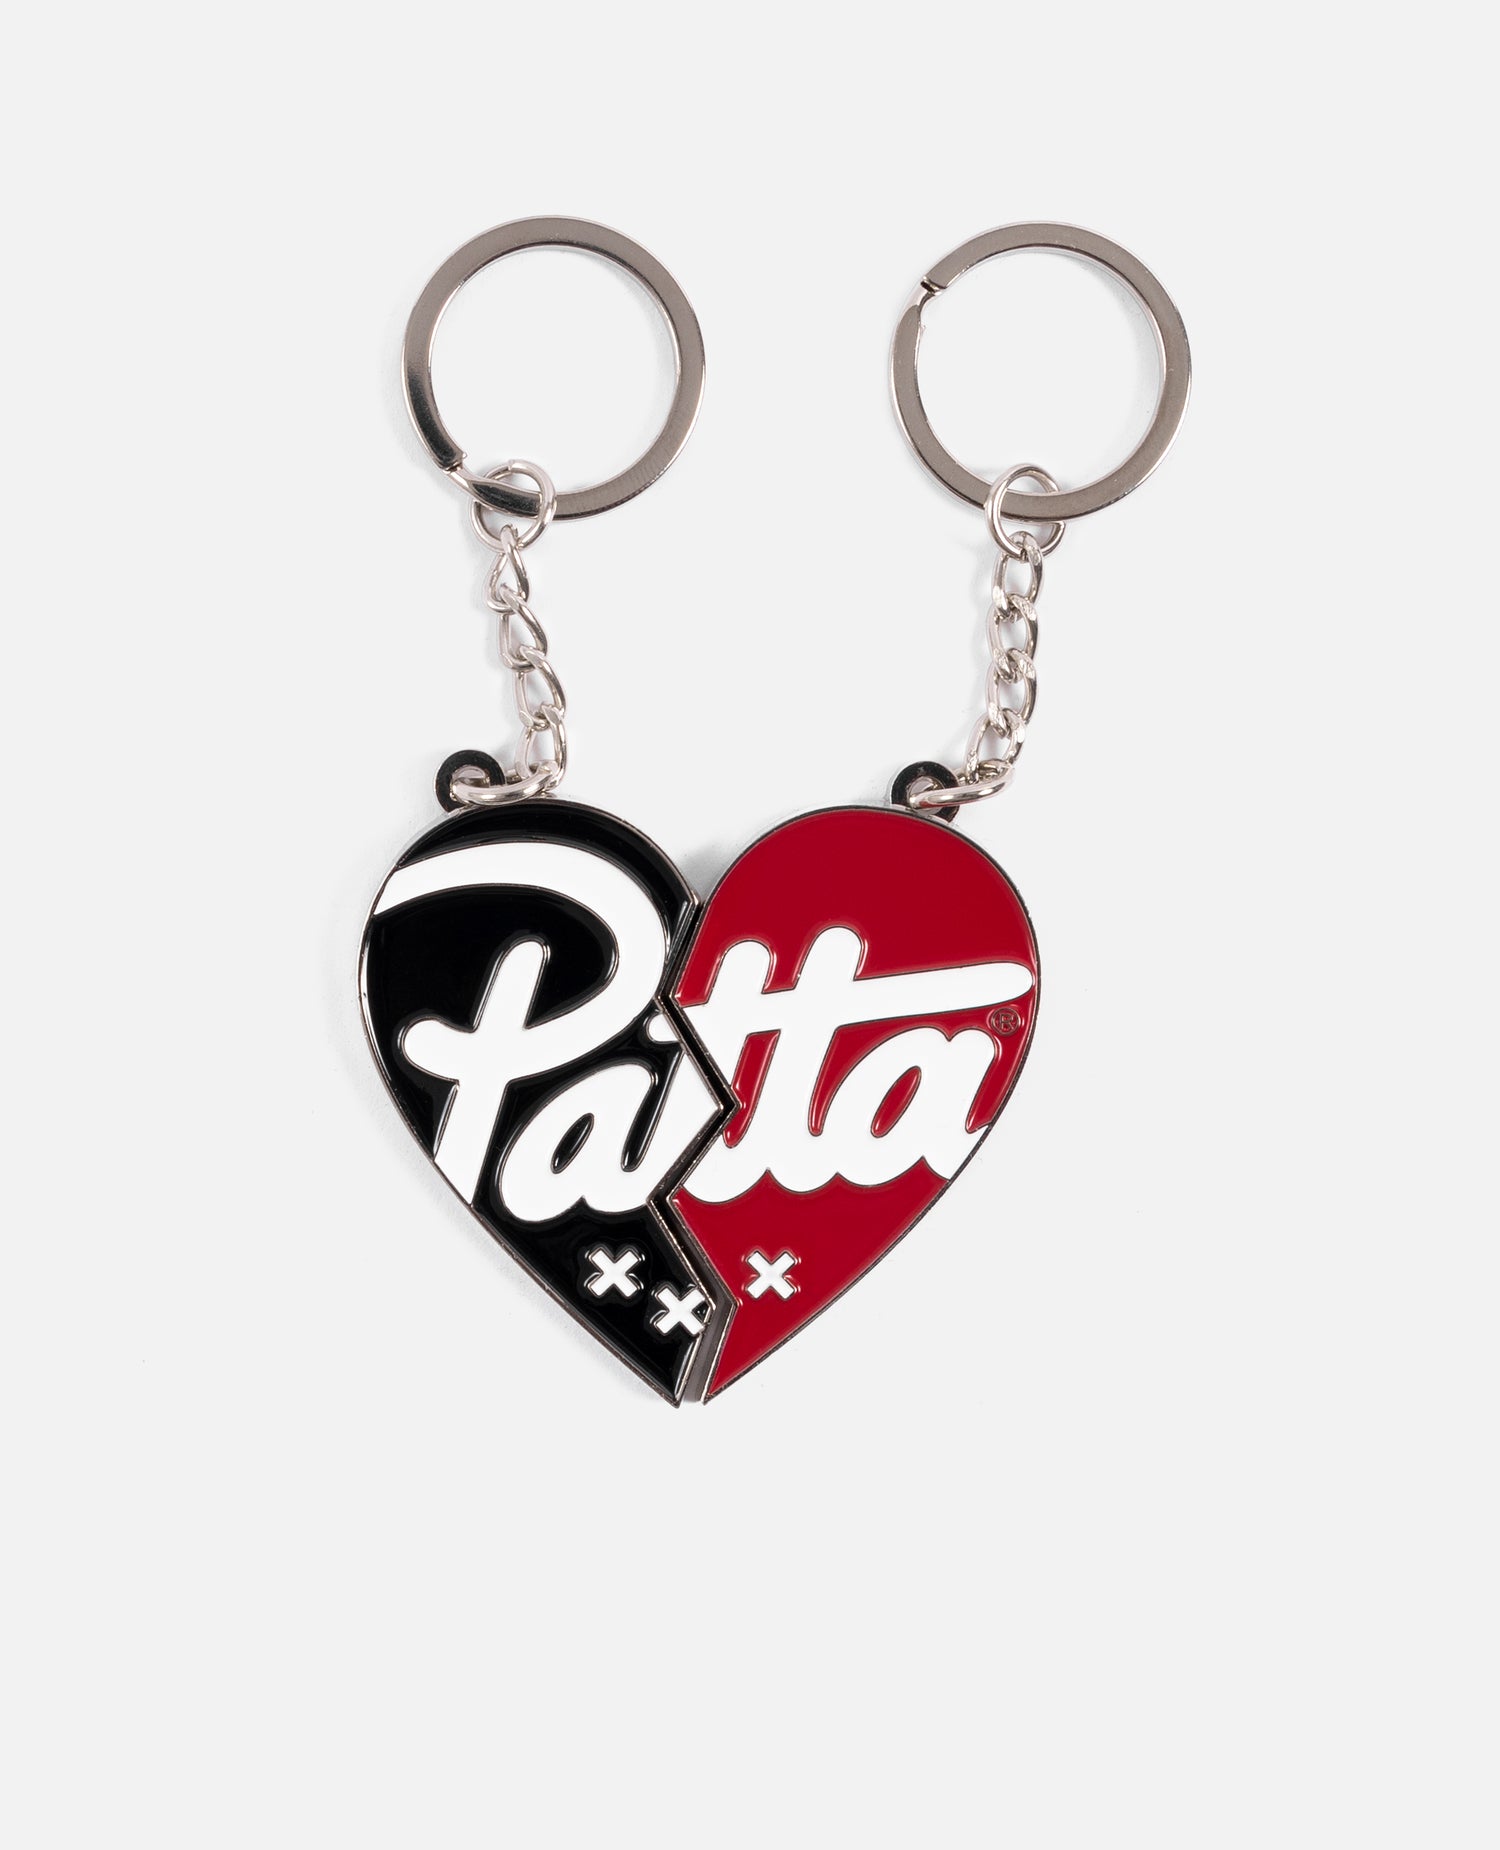 Patta Heart Keychain (Black/Red)